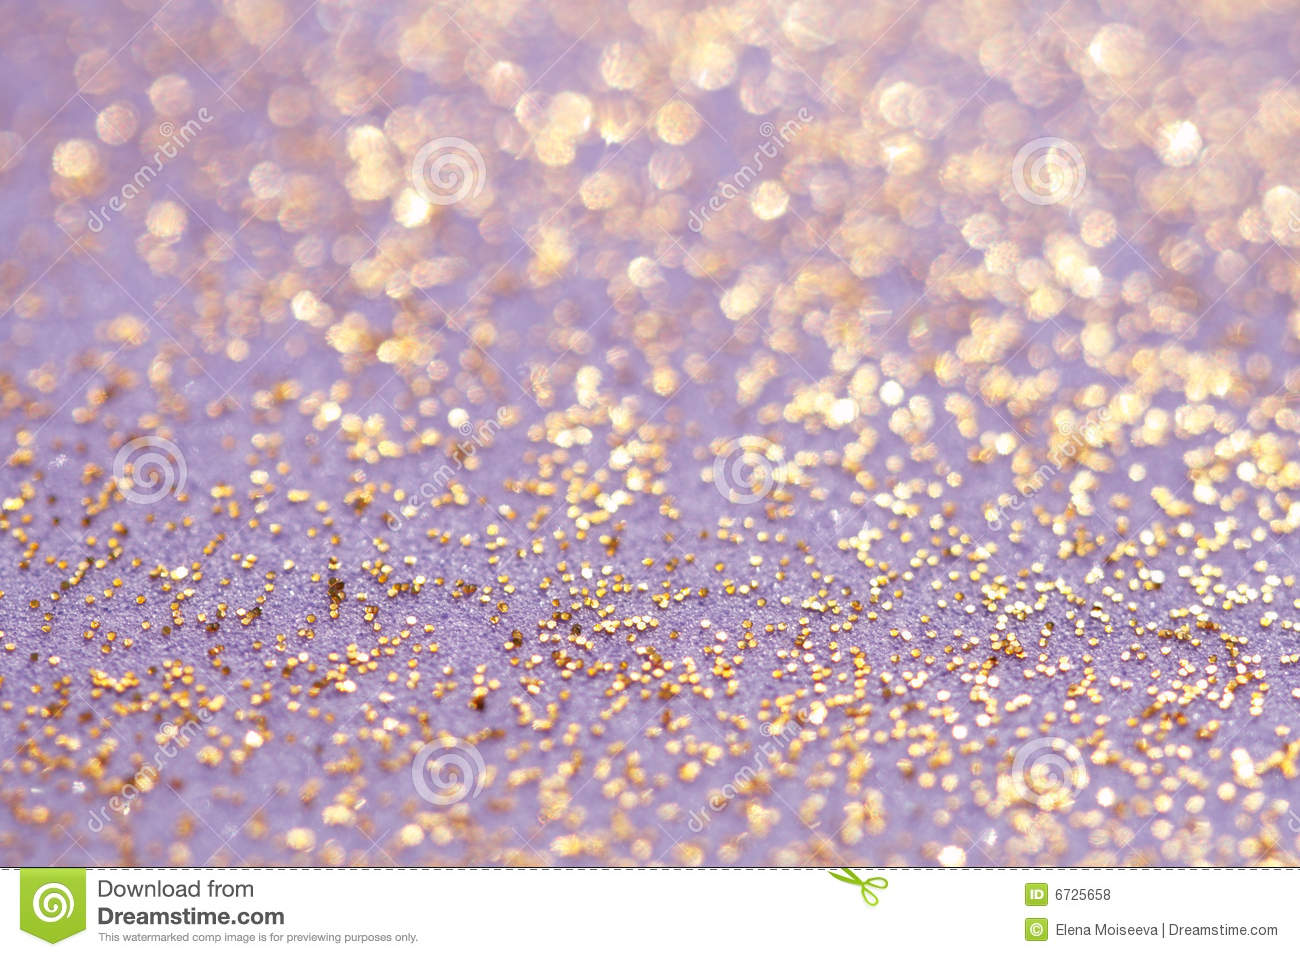 Golden Glitter Sparkles Dust Background Royalty Free Stock Photos    